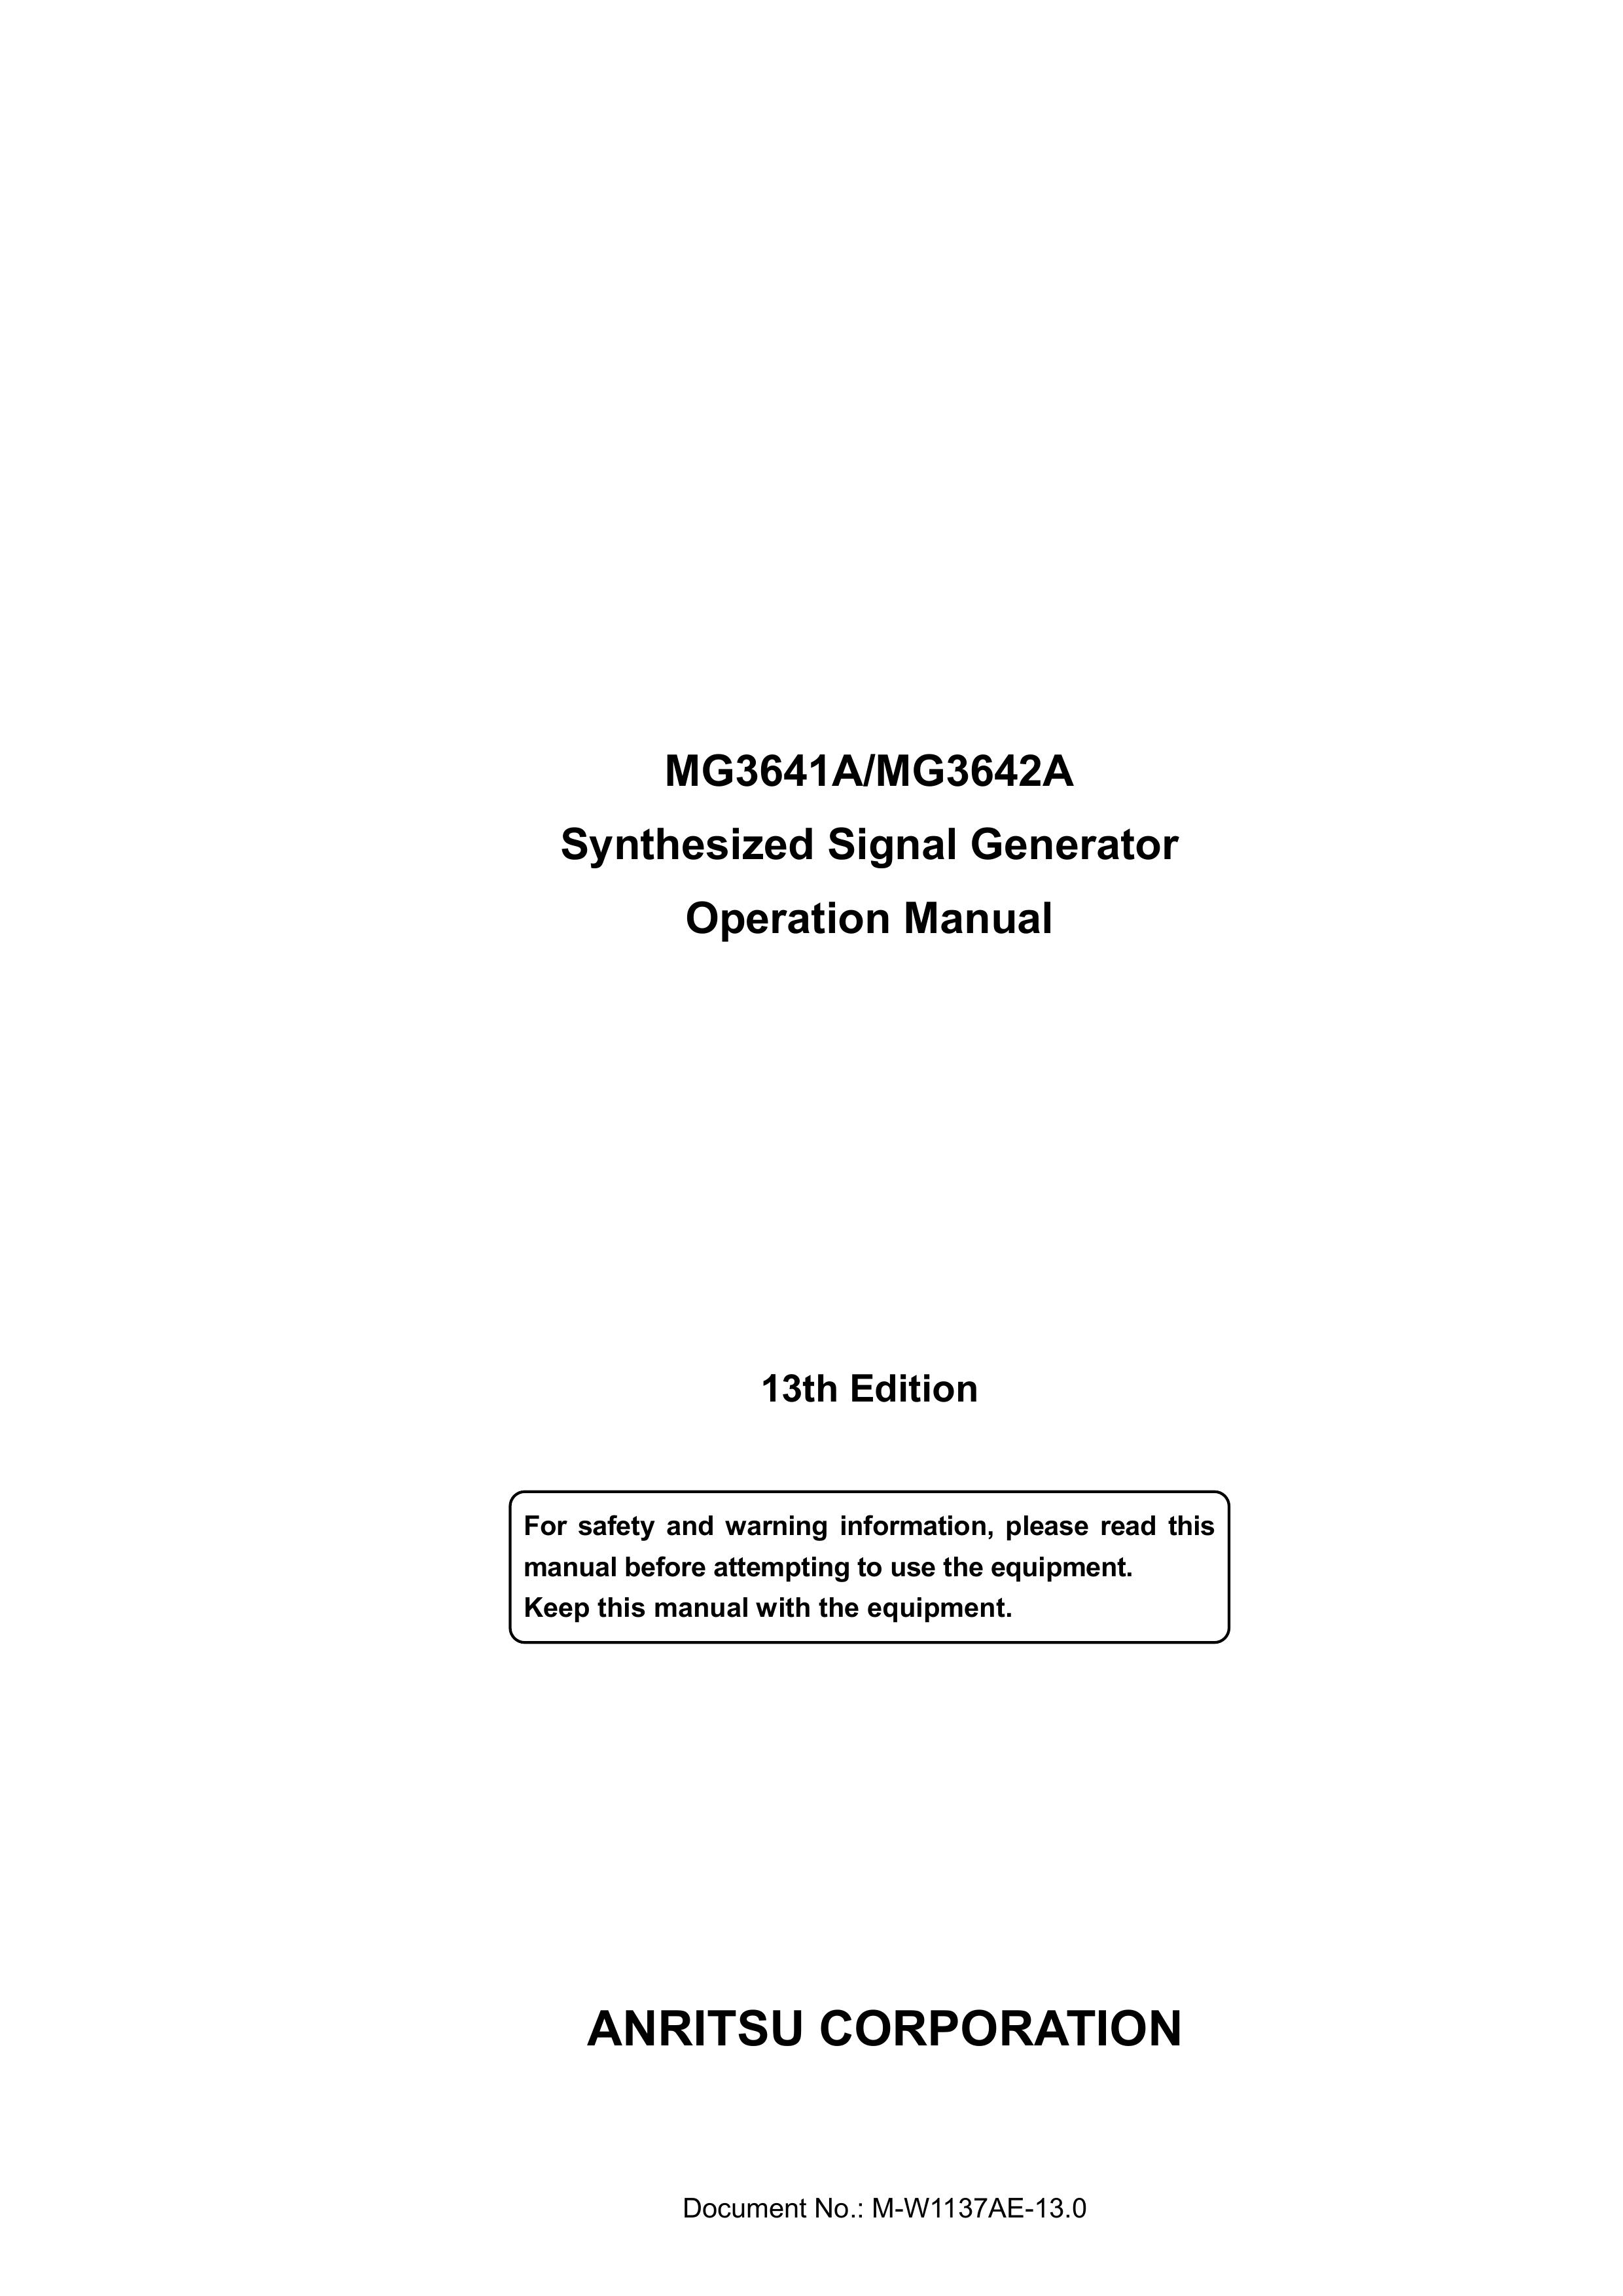 Anritsu MG3642A Portable Generator User Manual